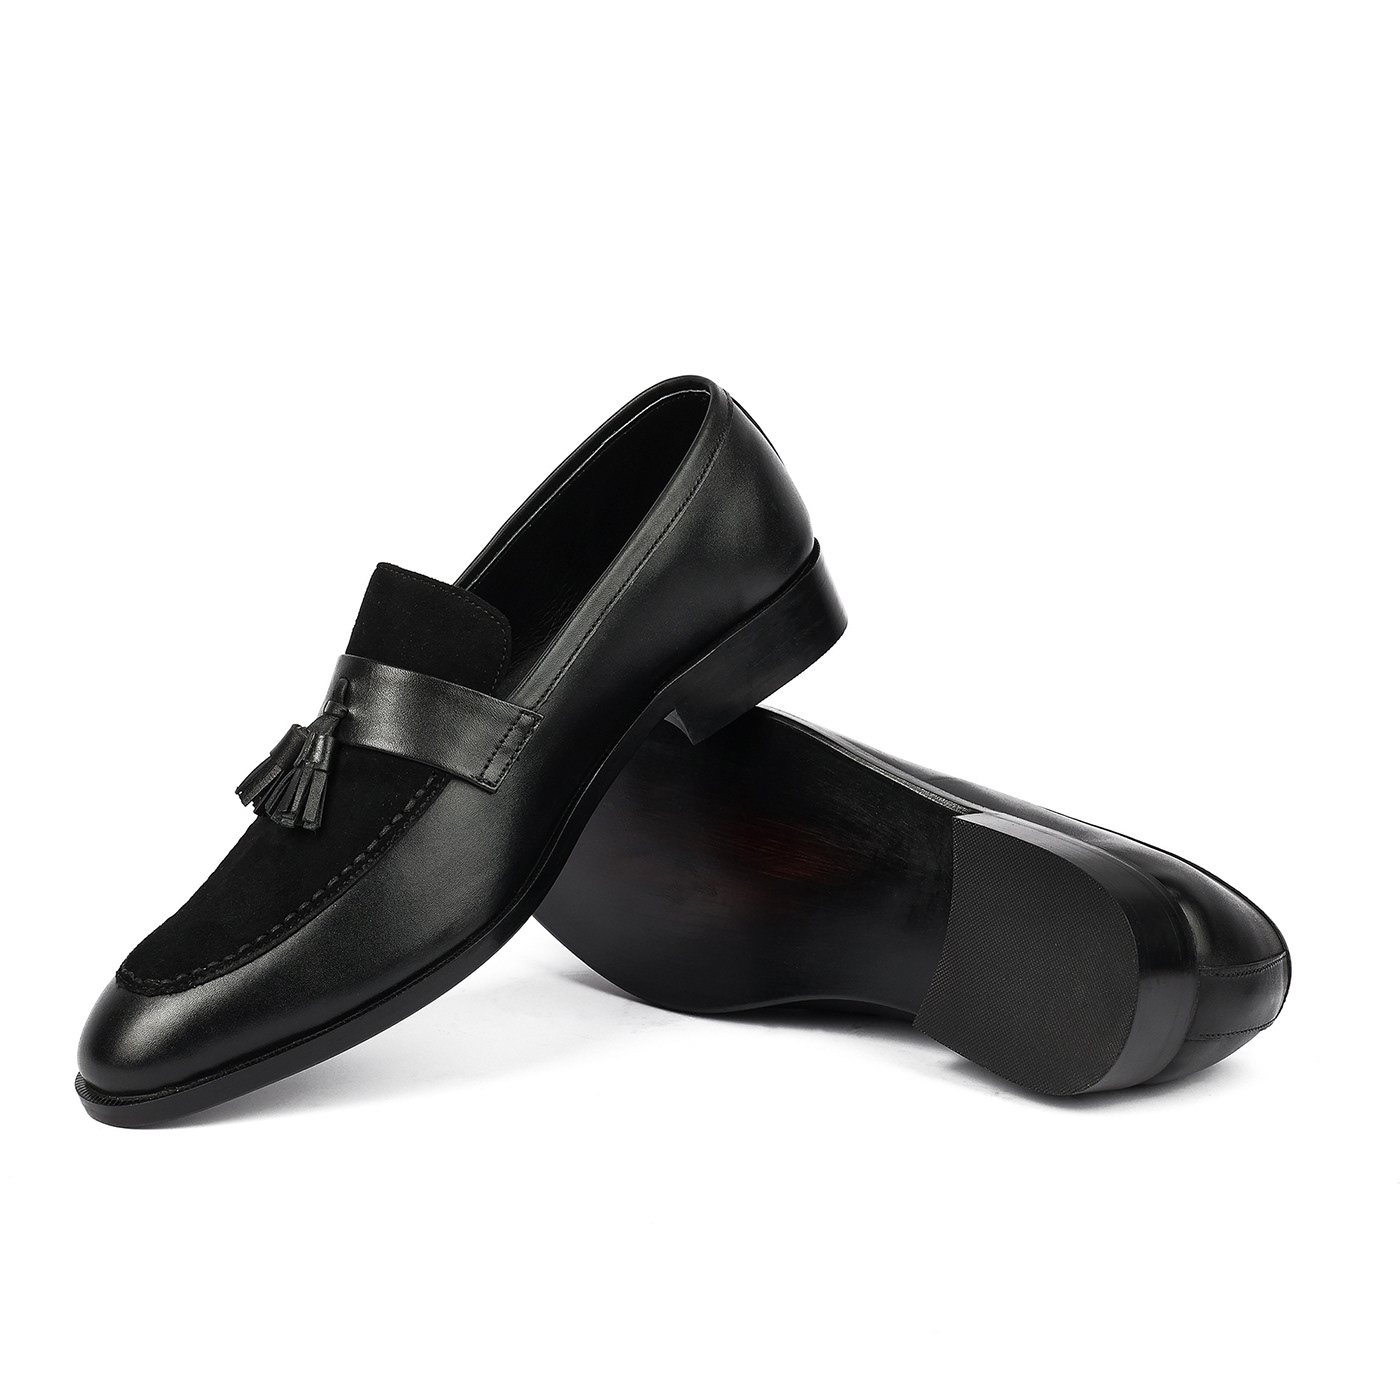 boot shoes footwear leather handmade lettering Formal elegant luxury